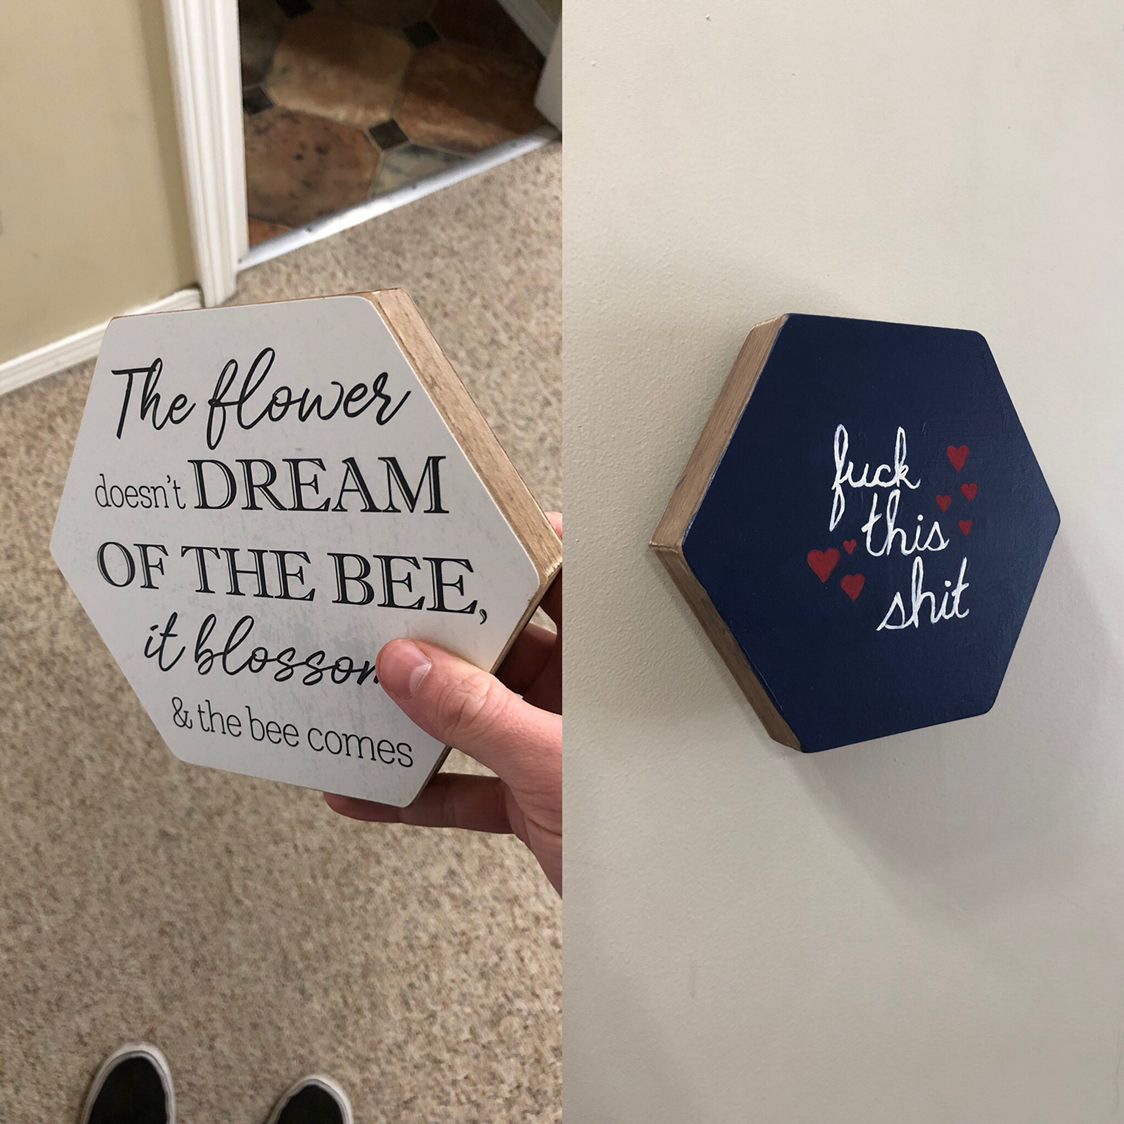 My girlfriend got a cheesy sign she didn’t like so I repurposed it.